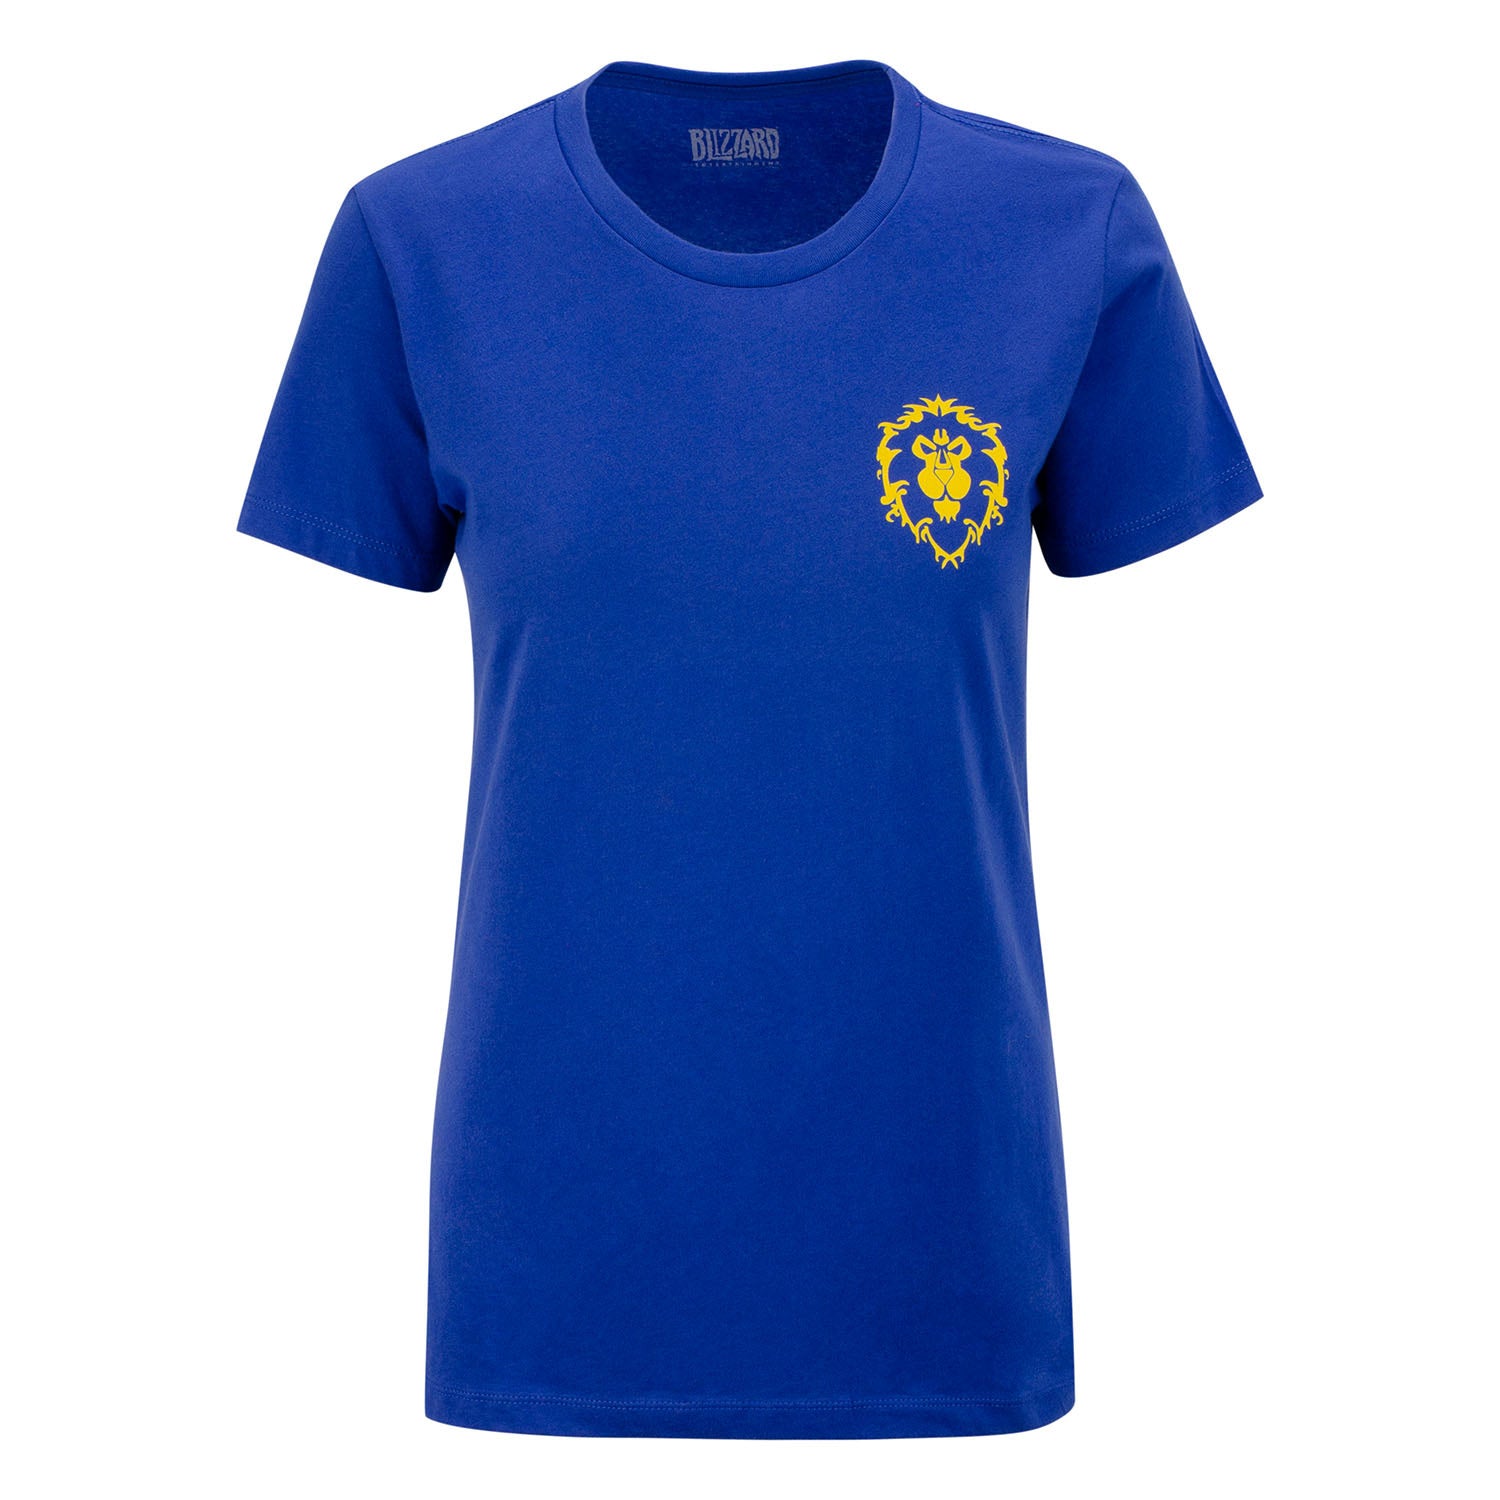 World of Warcraft Alliance Women's Blue T-Shirt - Front View